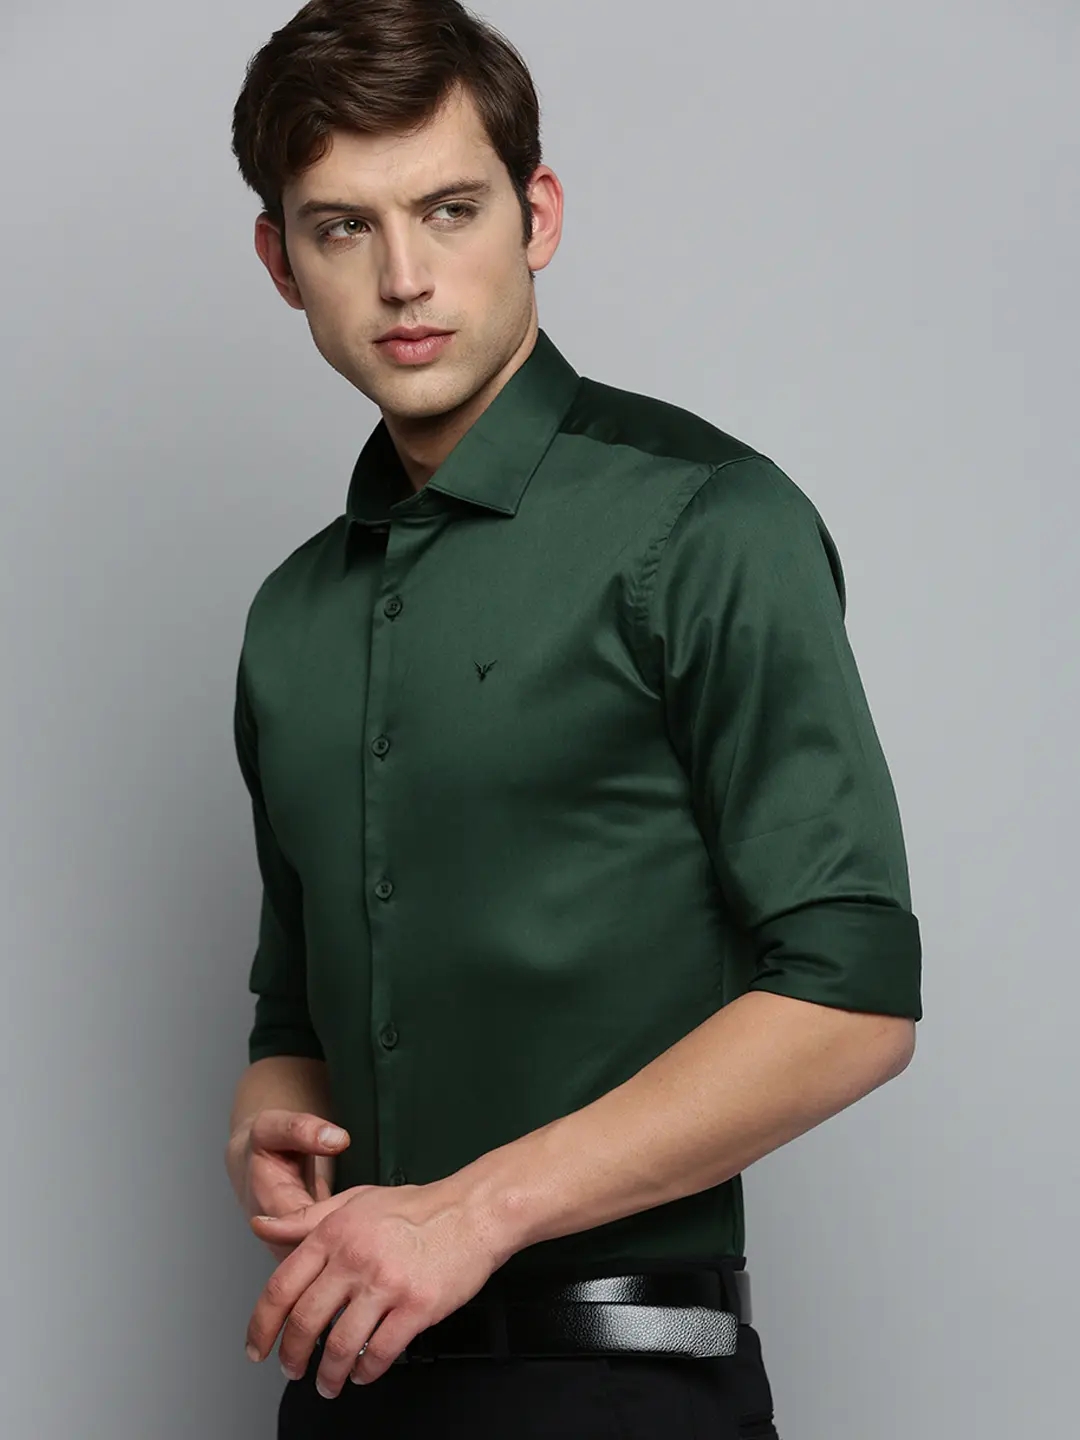 SHOWOFF Men's Spread Collar Solid Green Smart Shirt